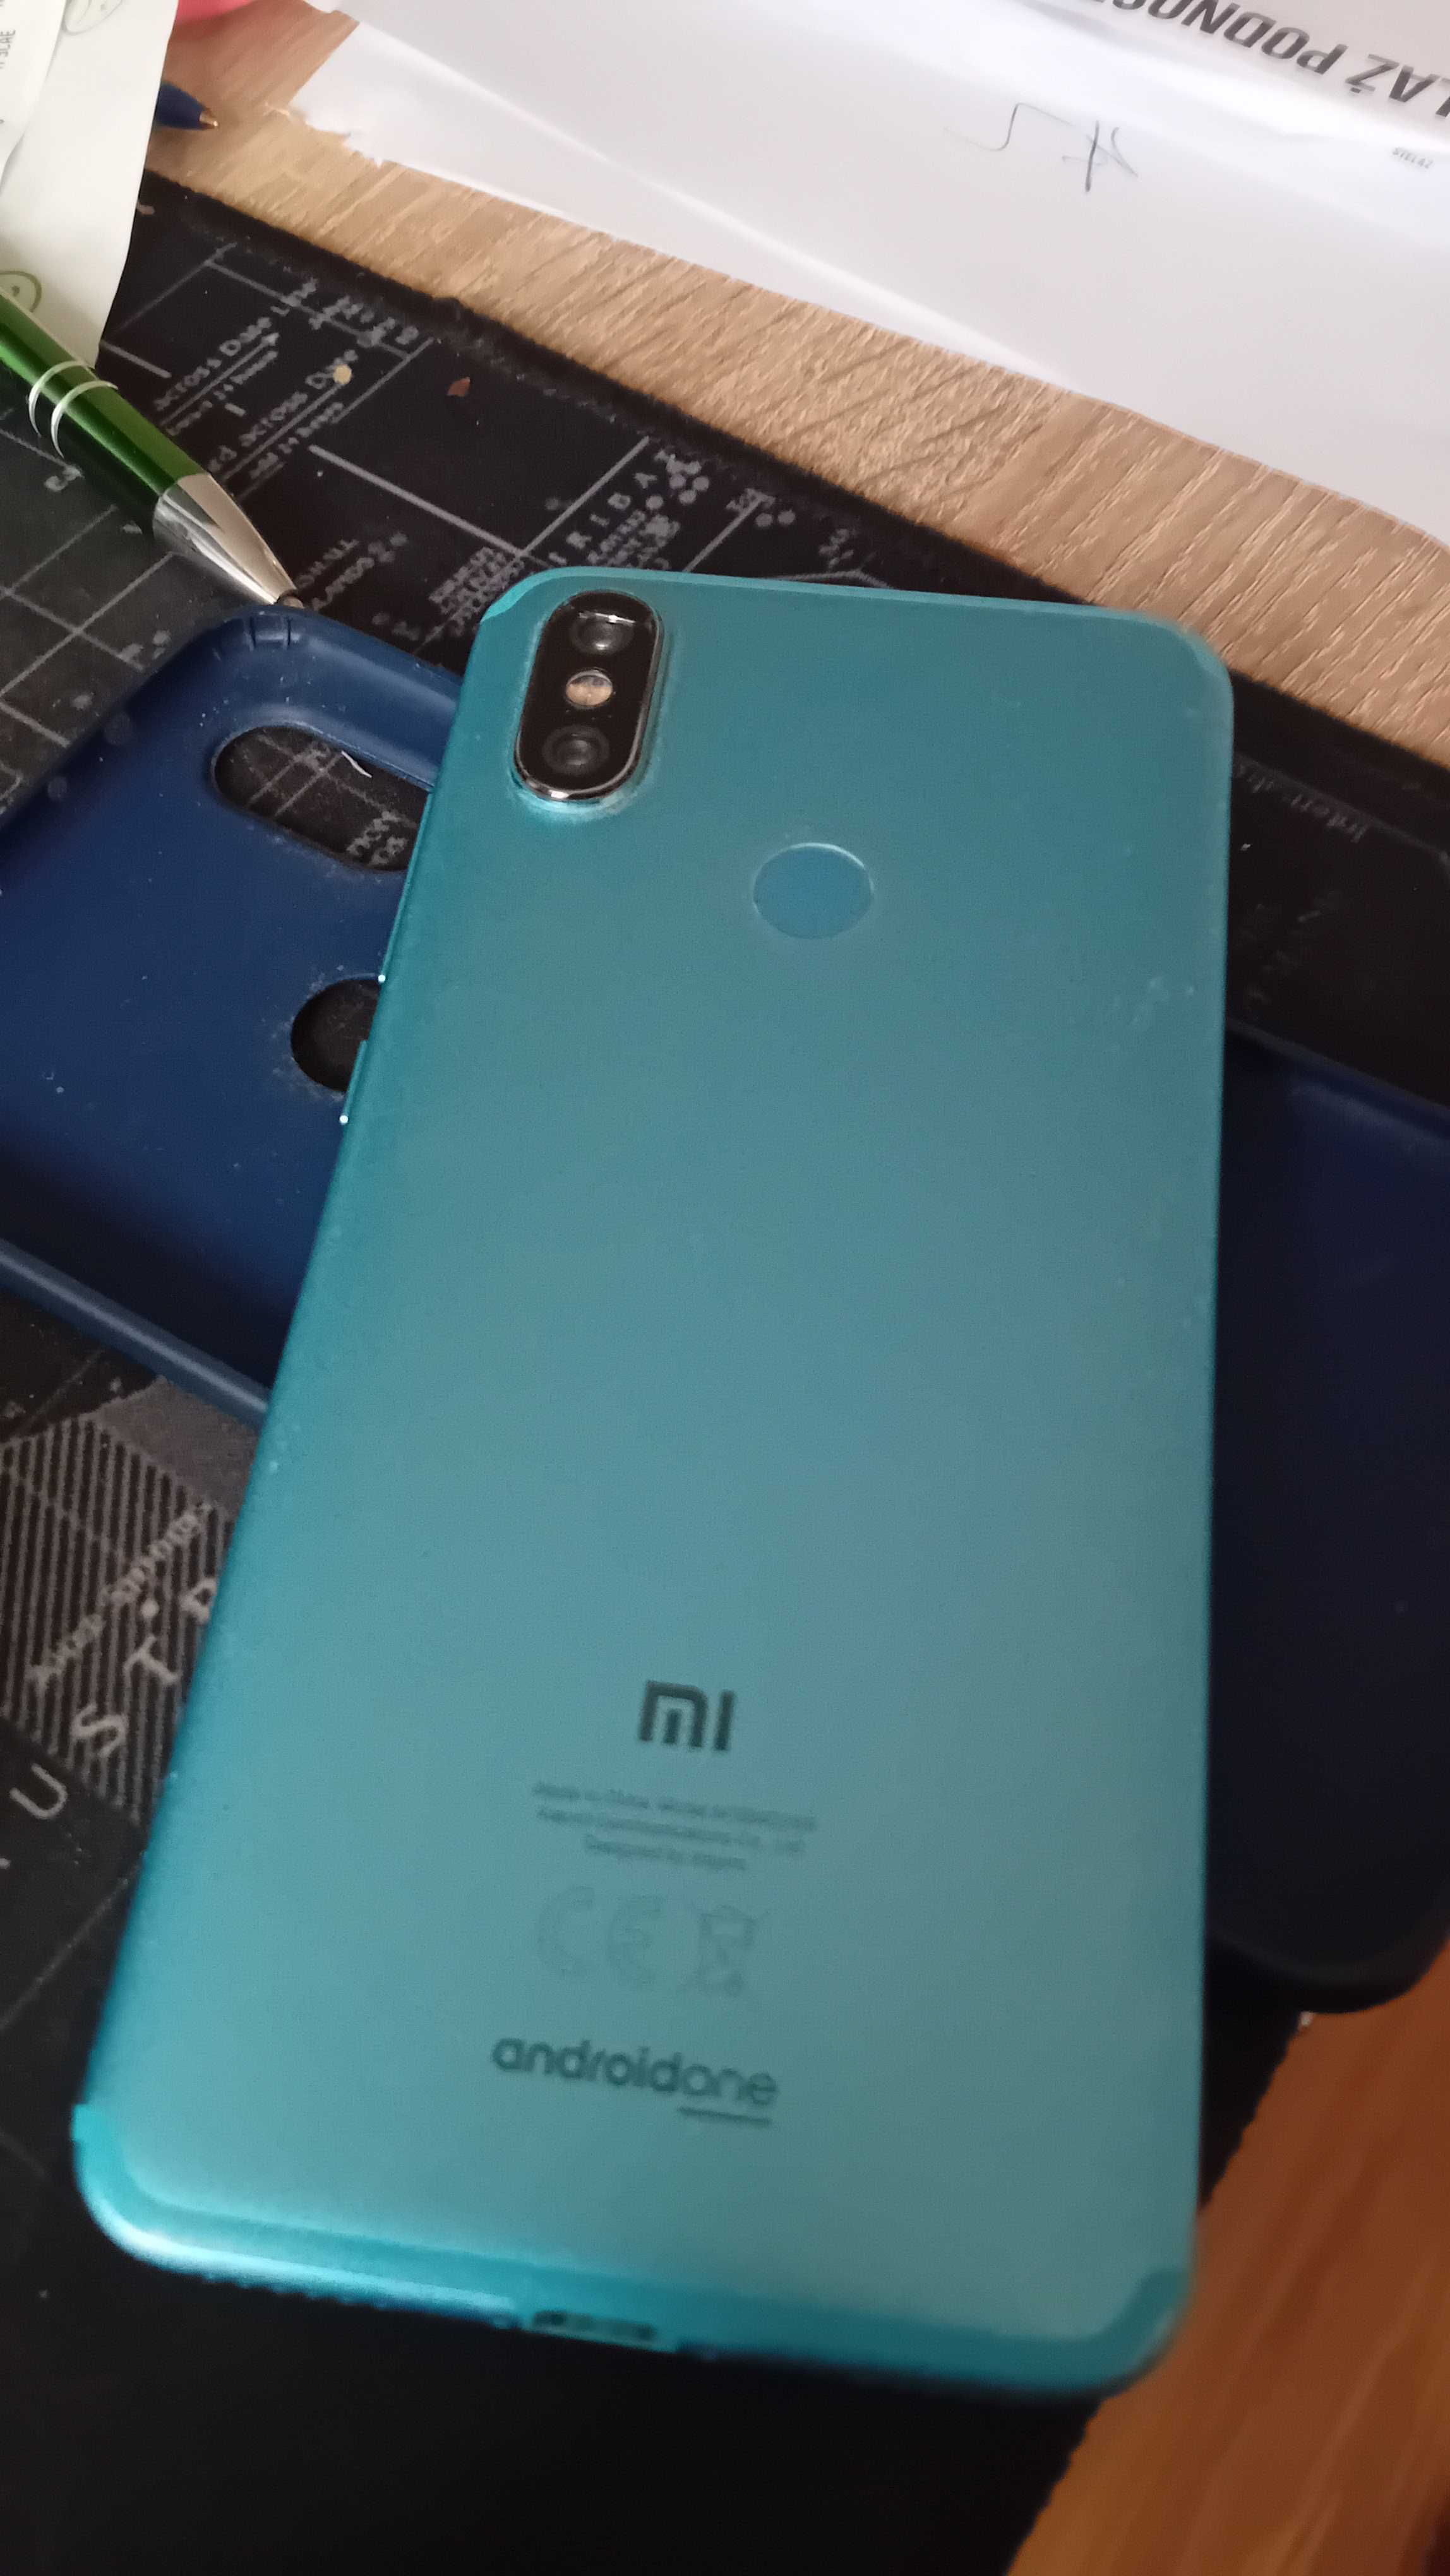 Smartfon Xiaomi Mi A2 4 GB / 64 GB 4G (LTE) biało-niebieski